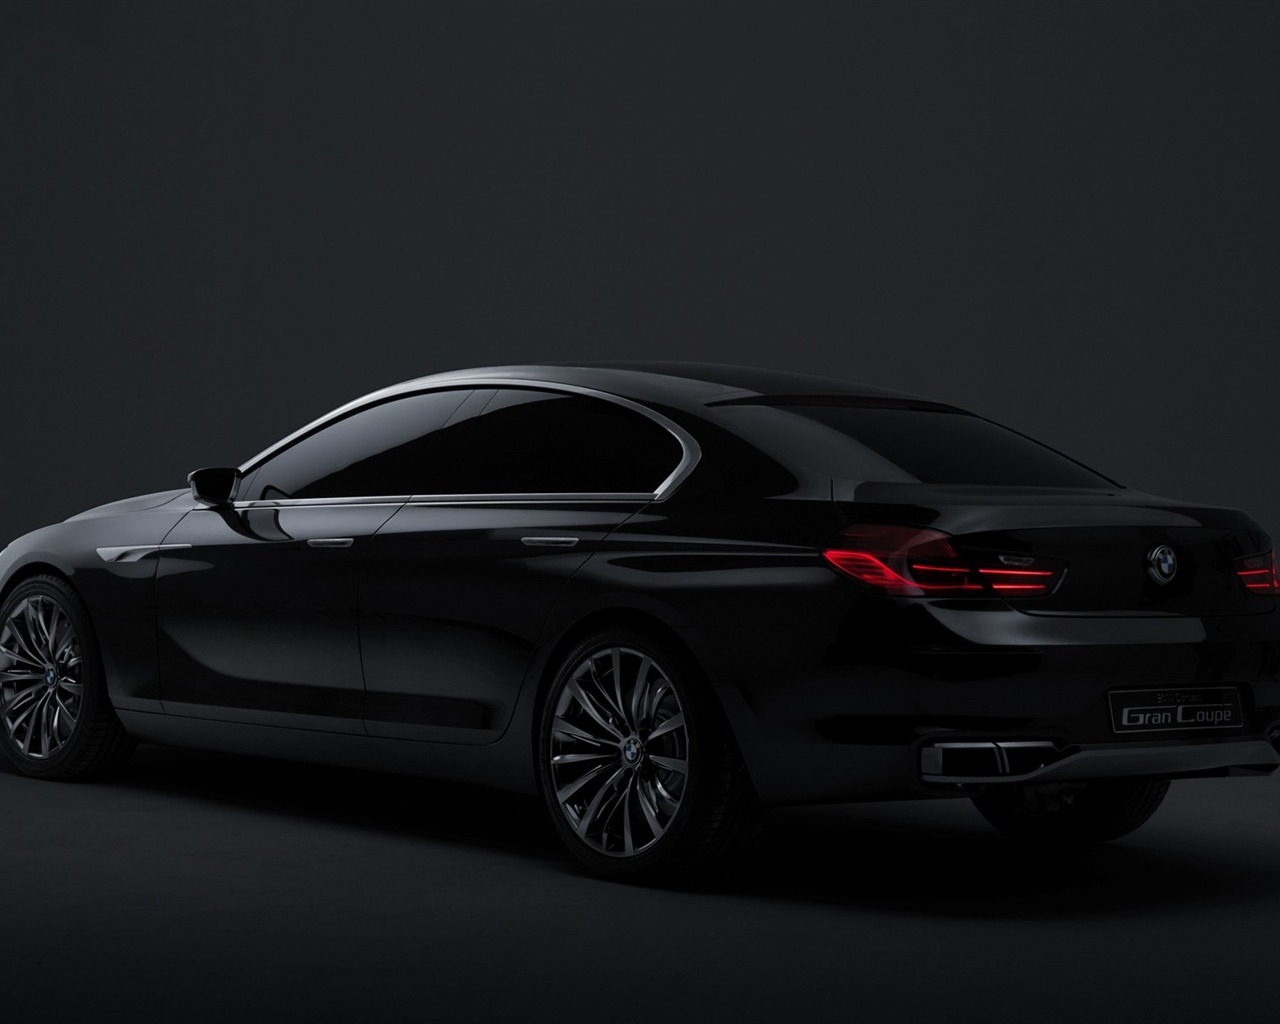 Fond d'écran BMW concept-car (1) #17 - 1280x1024